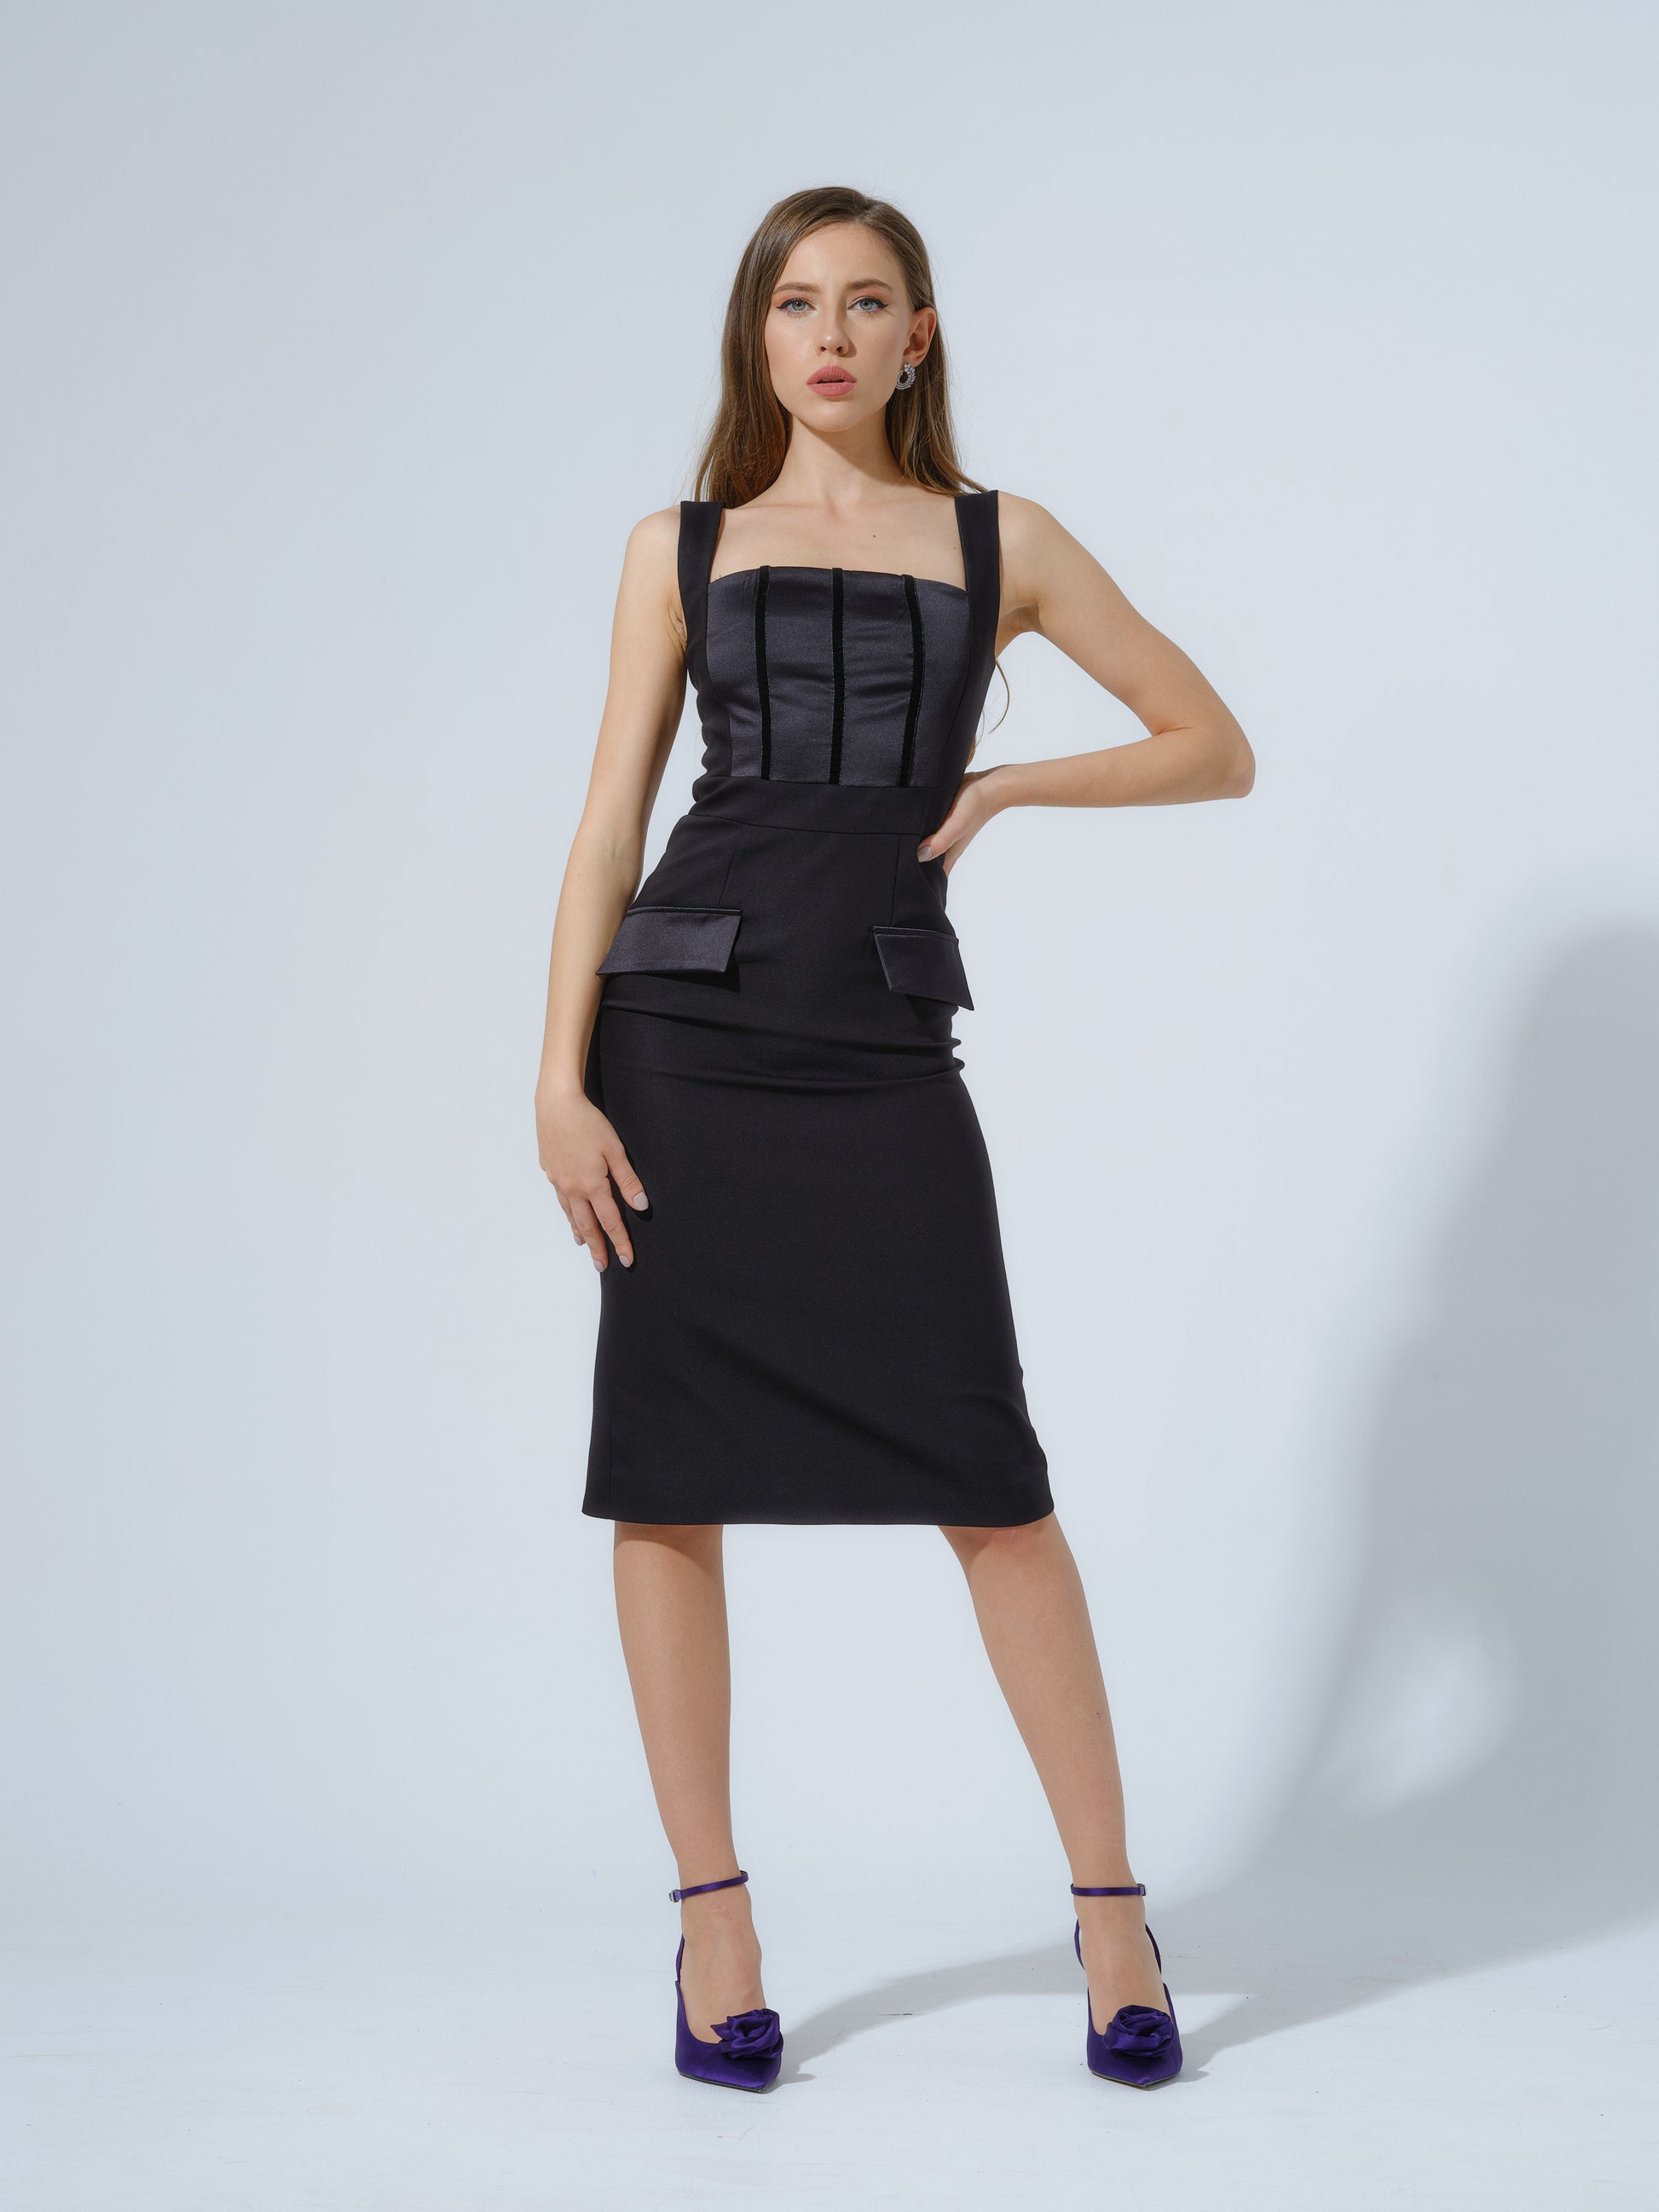 Tender Love Midi Dress by Tia Dorraine Women's Luxury Fashion Designer Clothing Brand